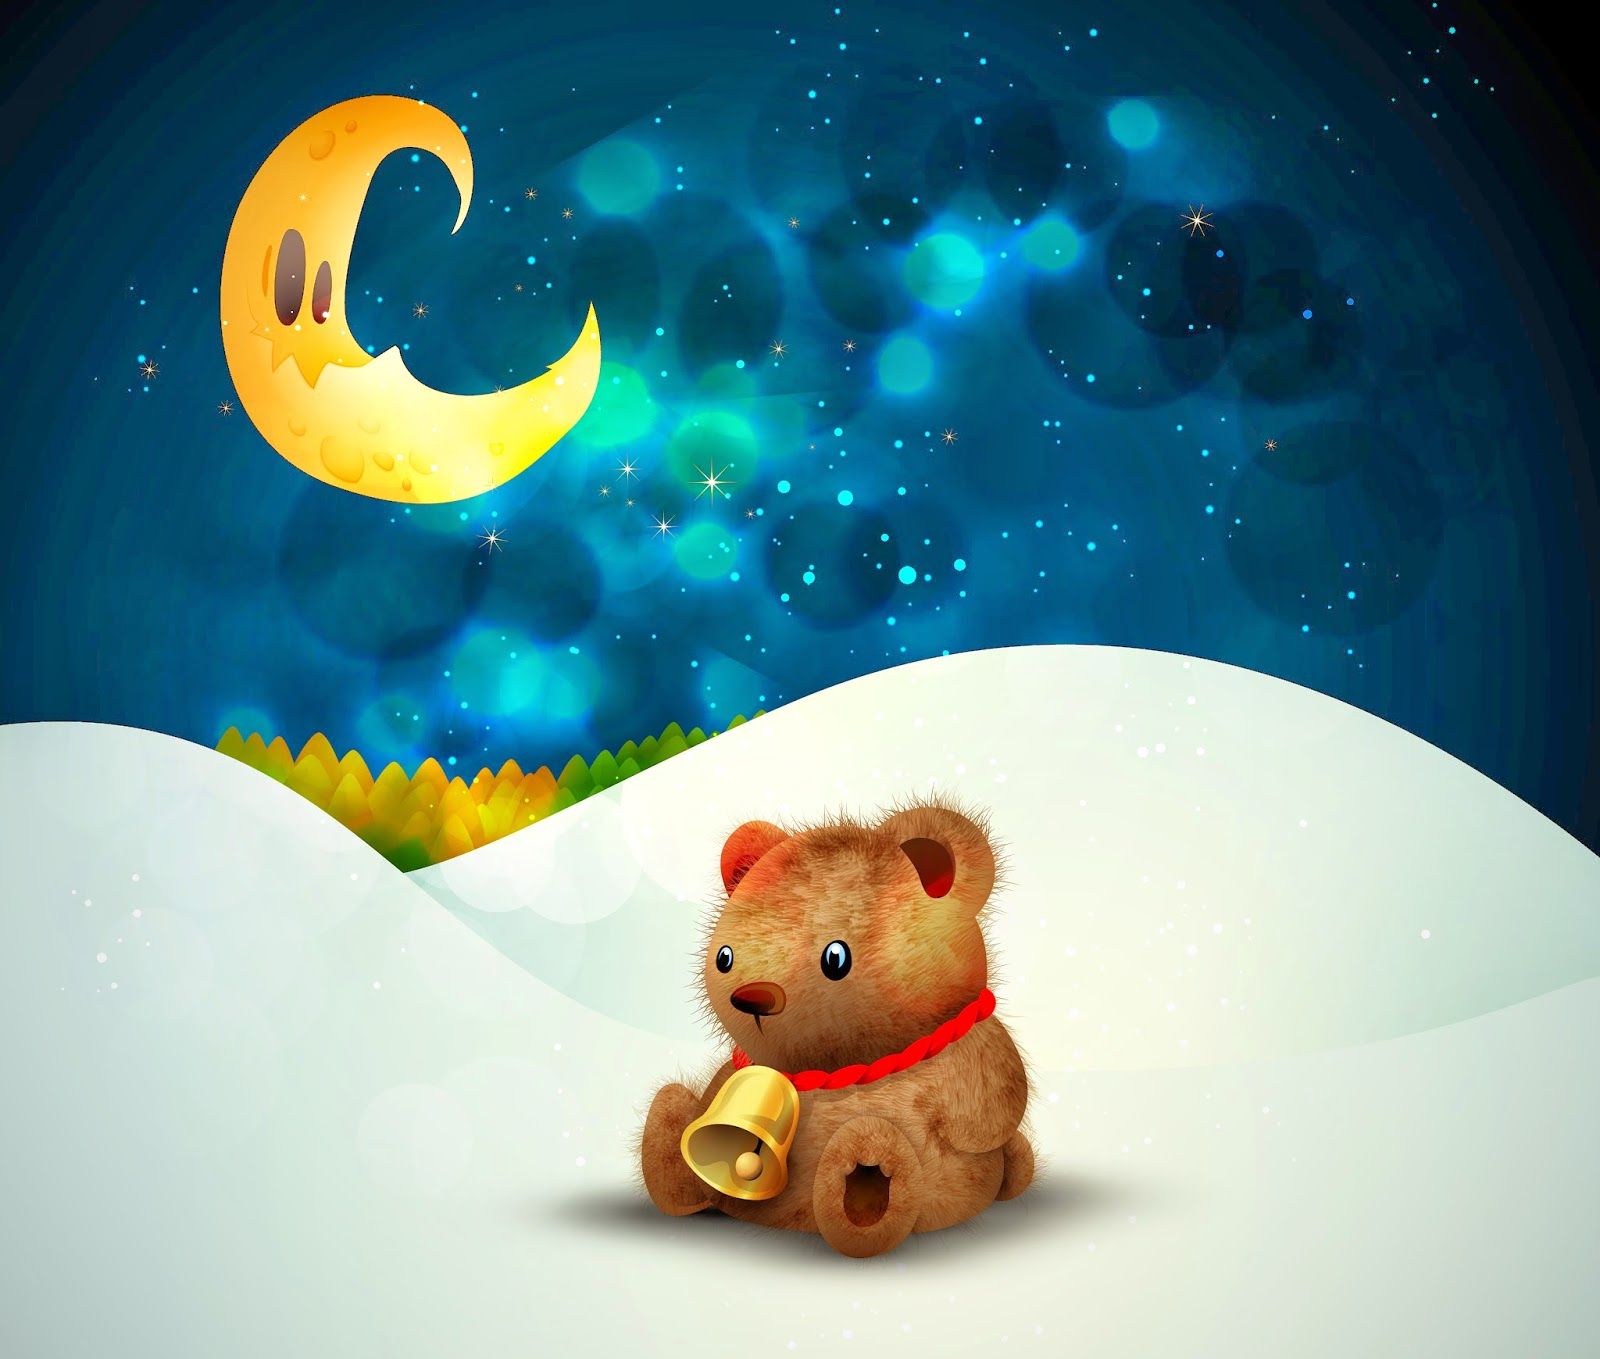 Teddy bear image